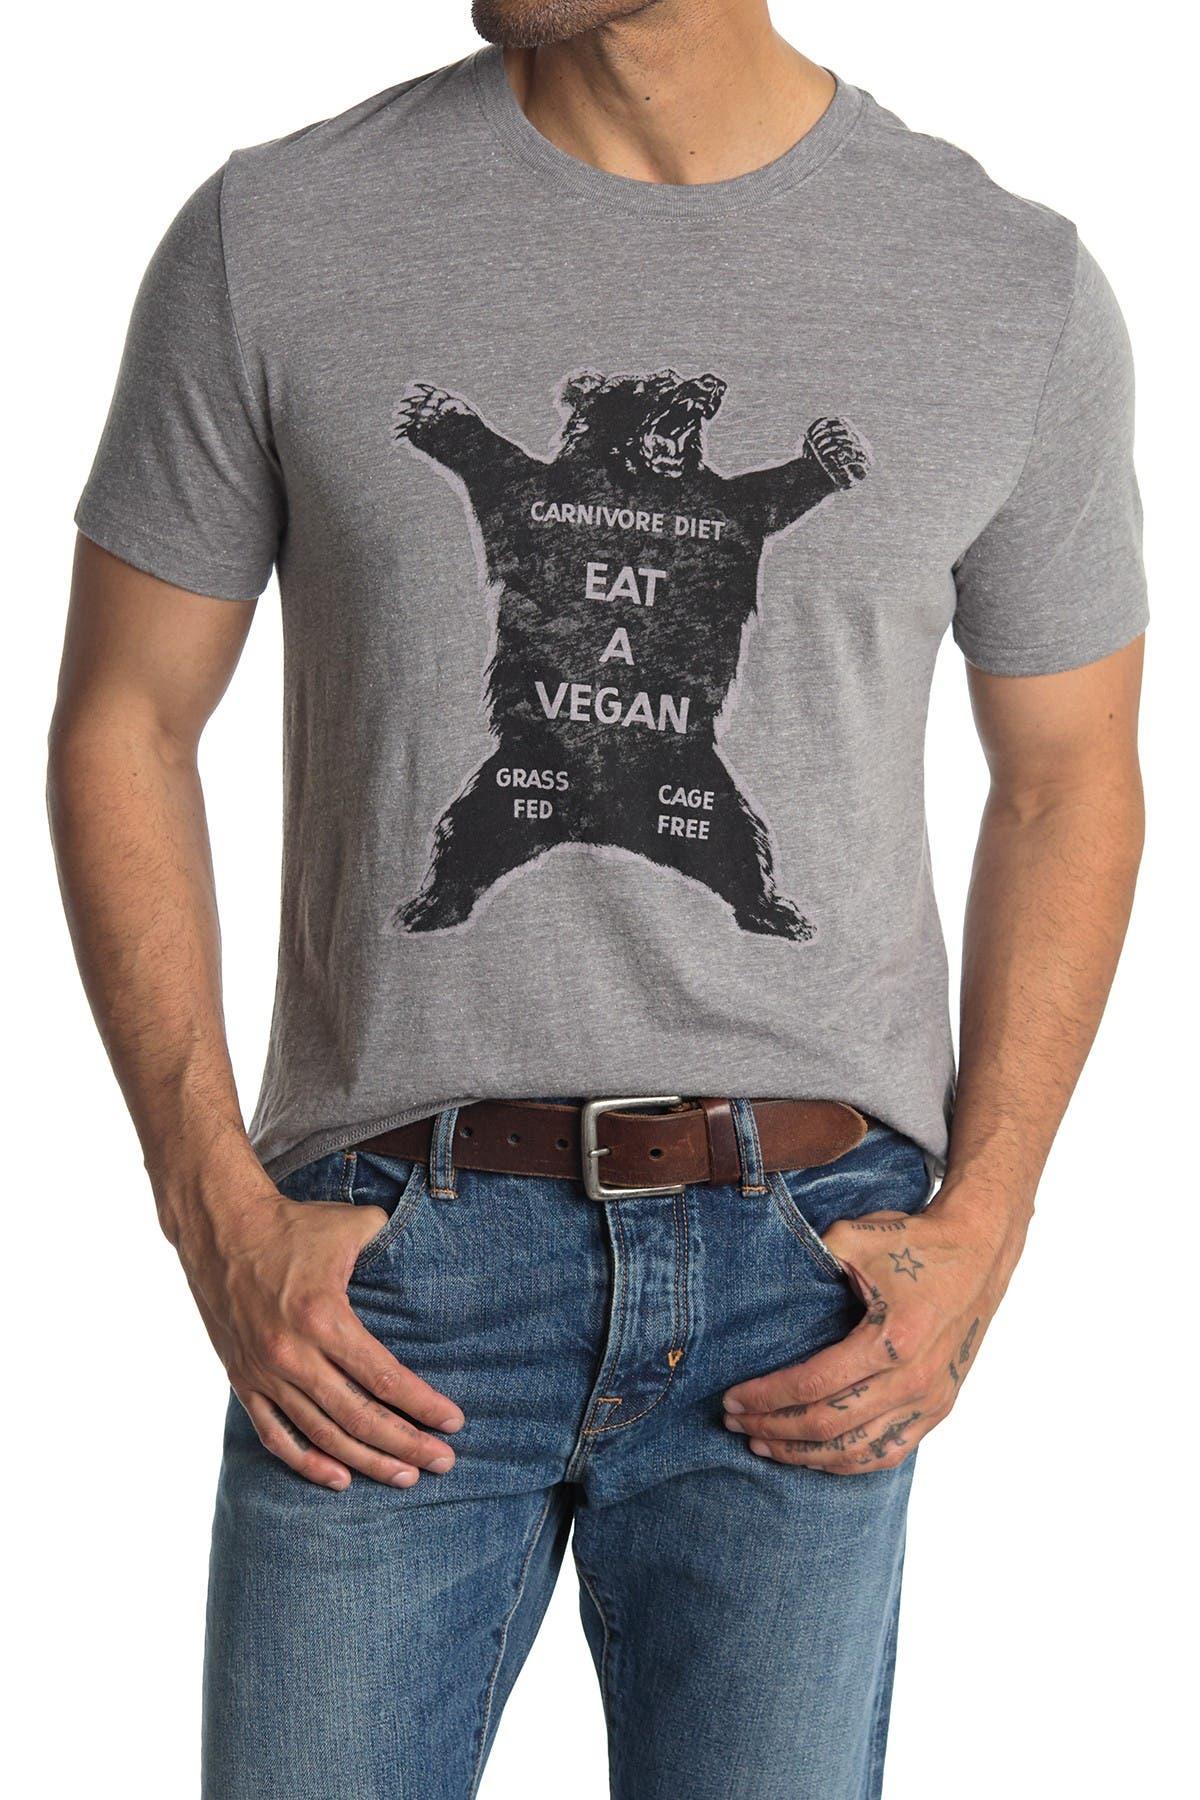 https://cdna.lystit.com/photos/nordstromrack/797730d2/lucky-brand-Grey-eat-A-Vegan-Graphic-T-shirt.jpeg